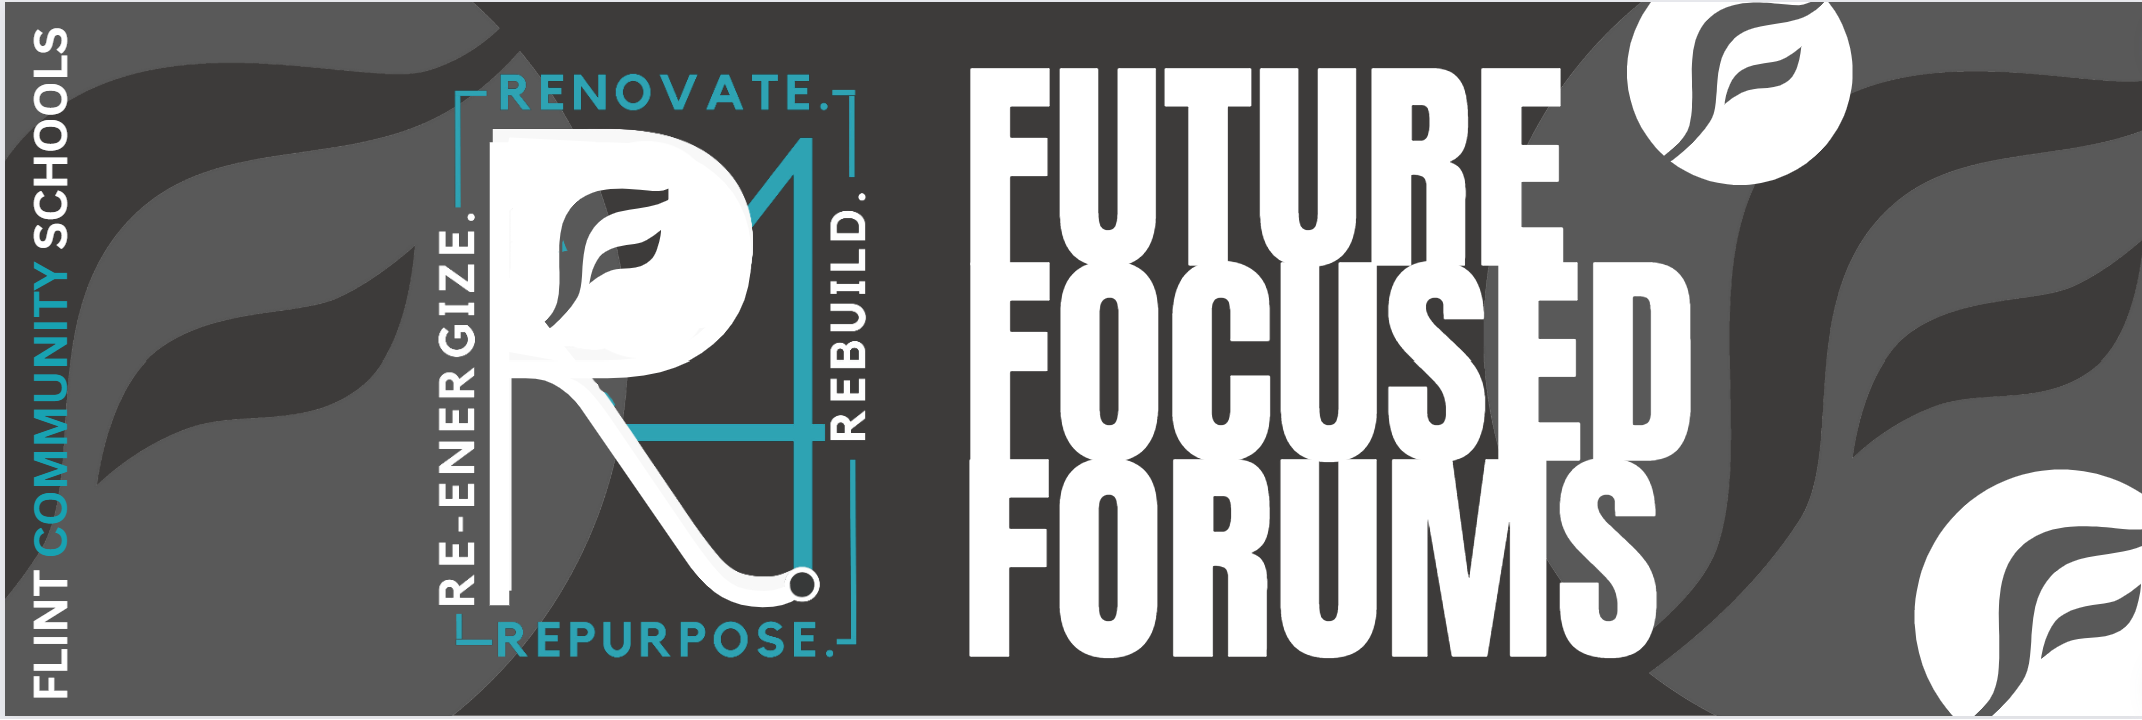 R4 - Future Focused Forums